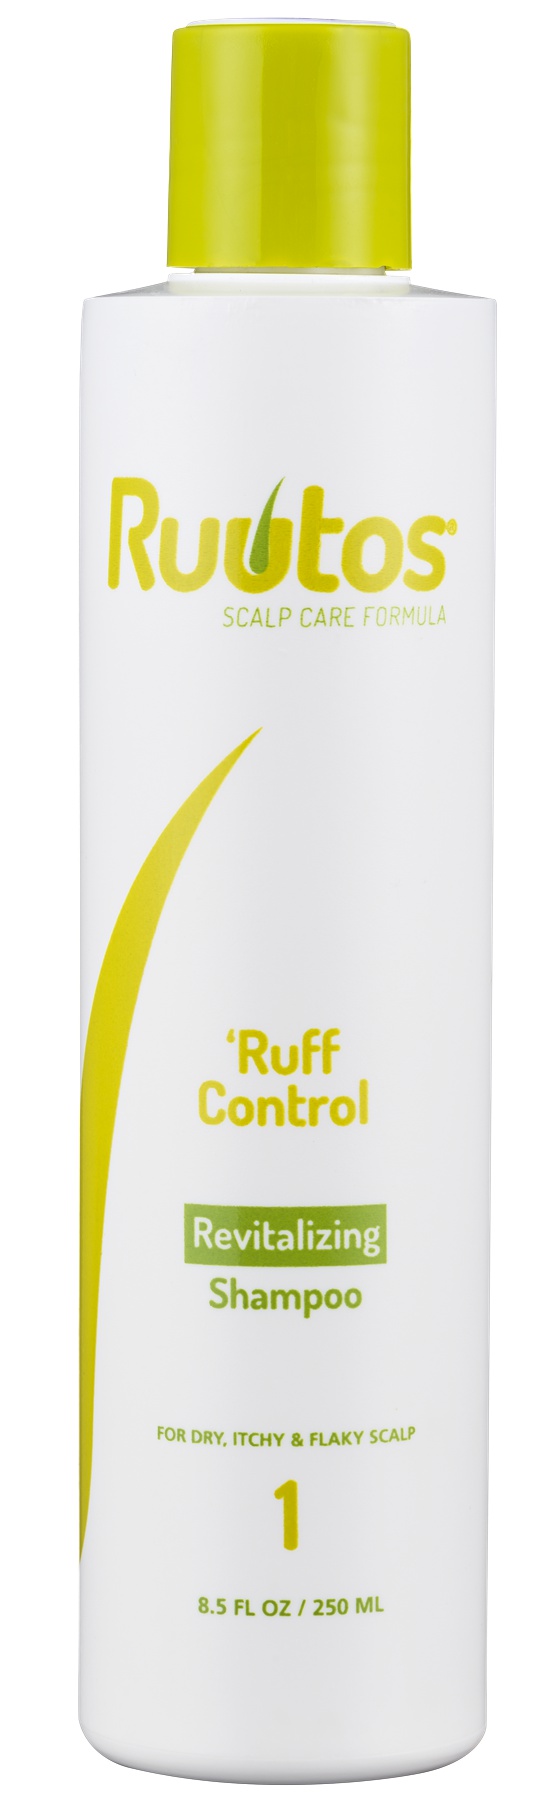 Ruutos 'Ruff Control Revitalizing Shampoo